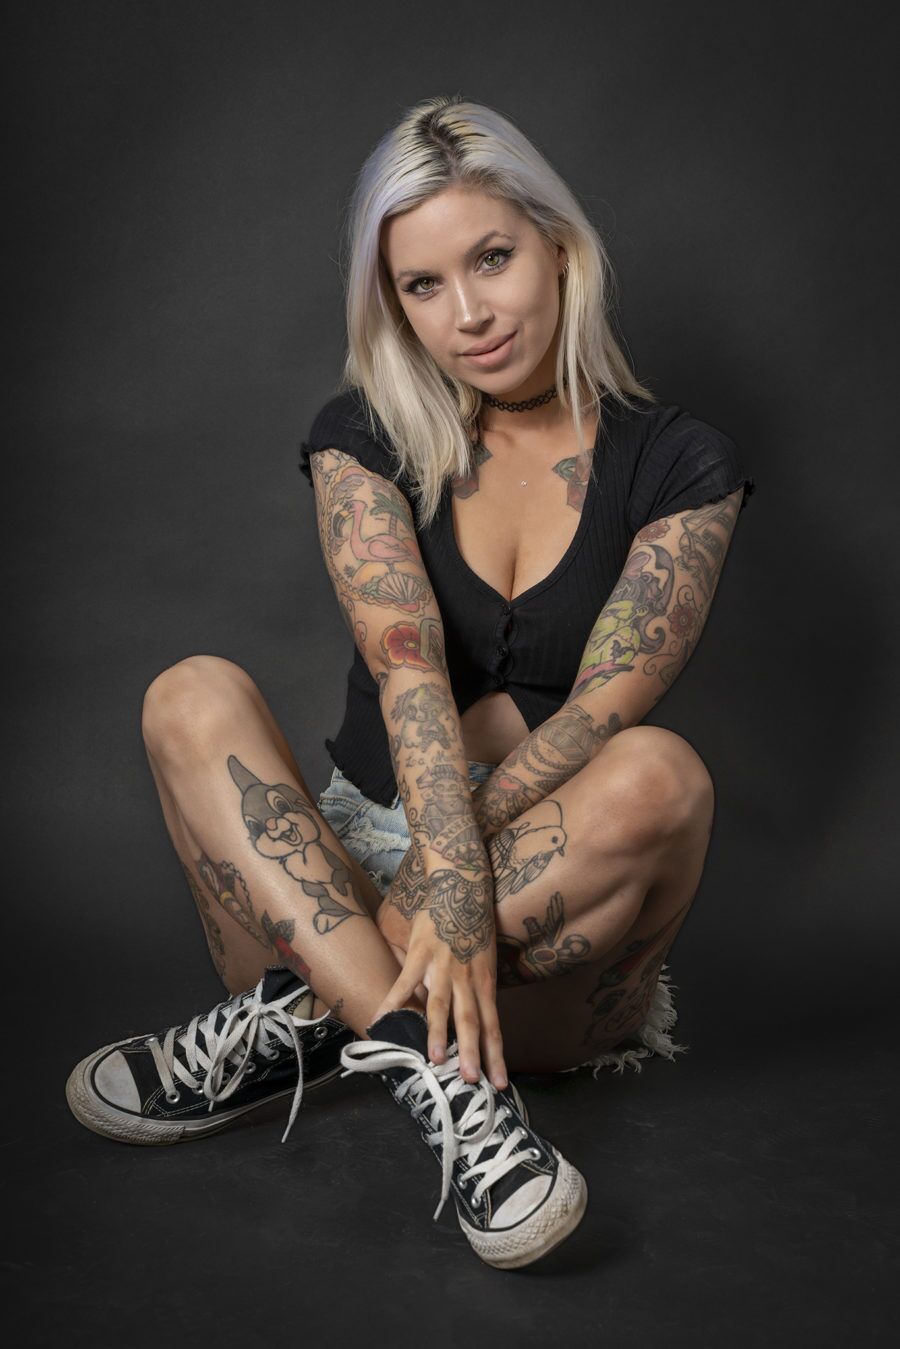 Meet Samii La' Morte, Tattooed Model - Tattooed Women